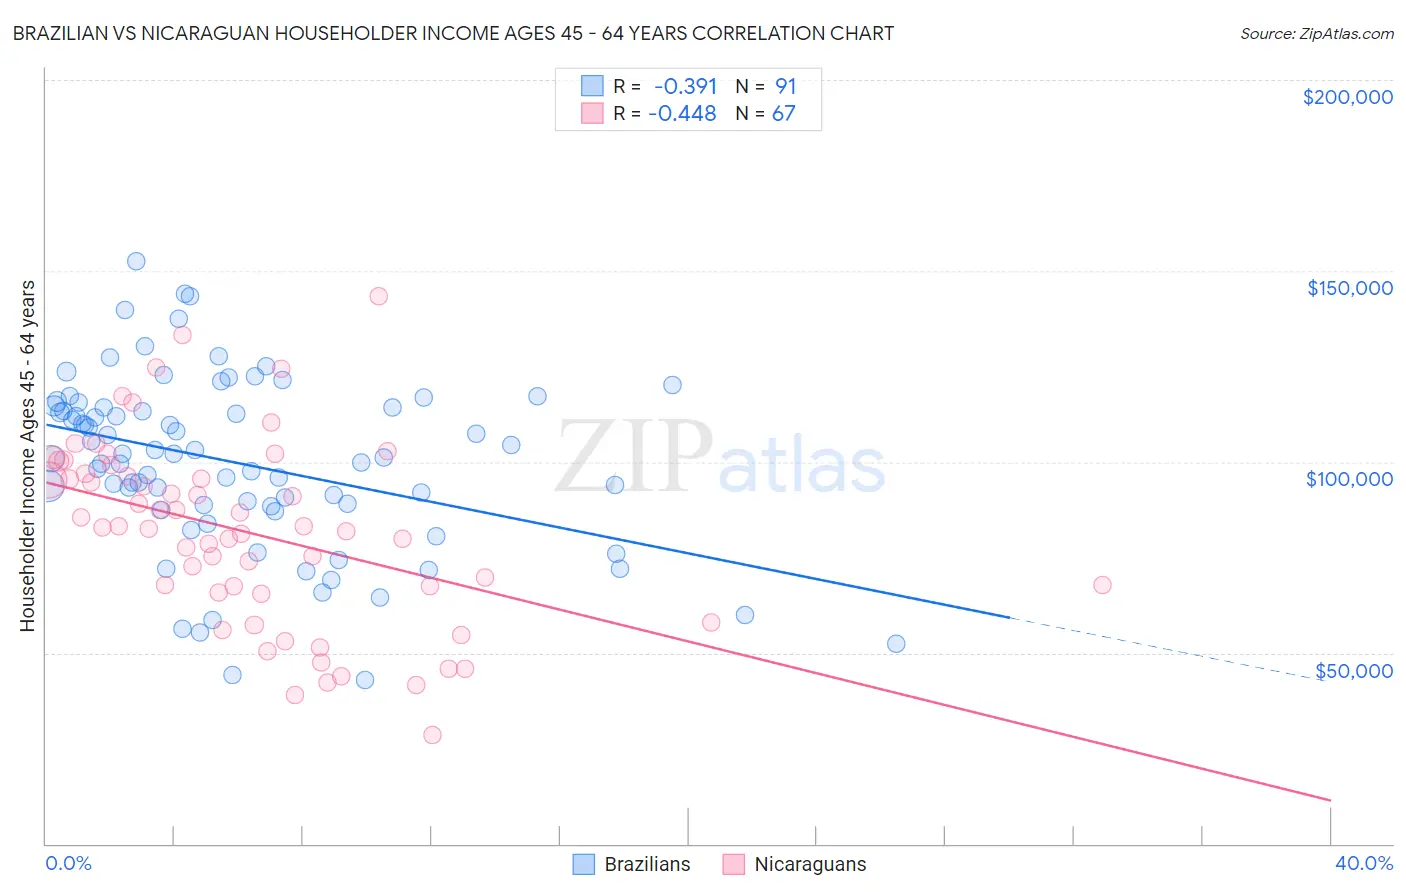 Brazilian vs Nicaraguan Householder Income Ages 45 - 64 years